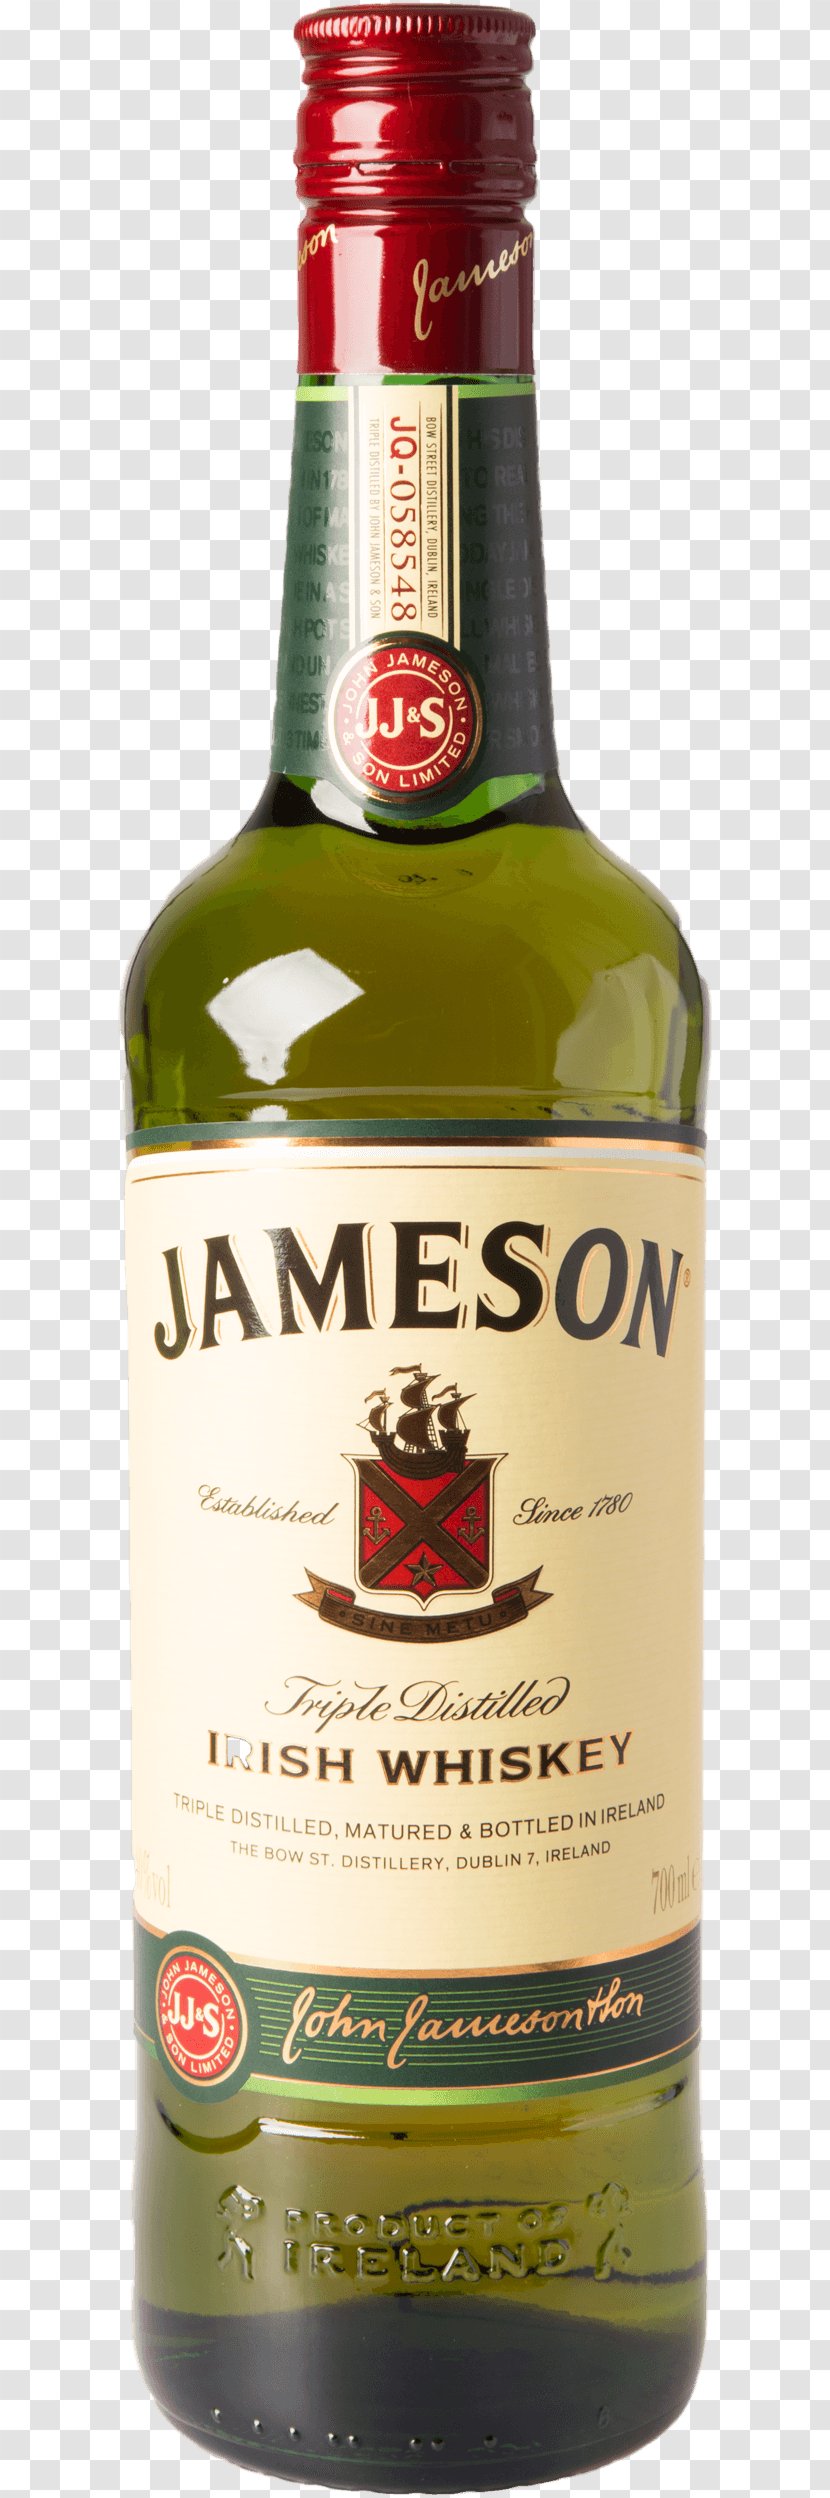 Jameson Irish Whiskey Bourbon Old Bushmills Distillery - Bottle - Drink Transparent PNG